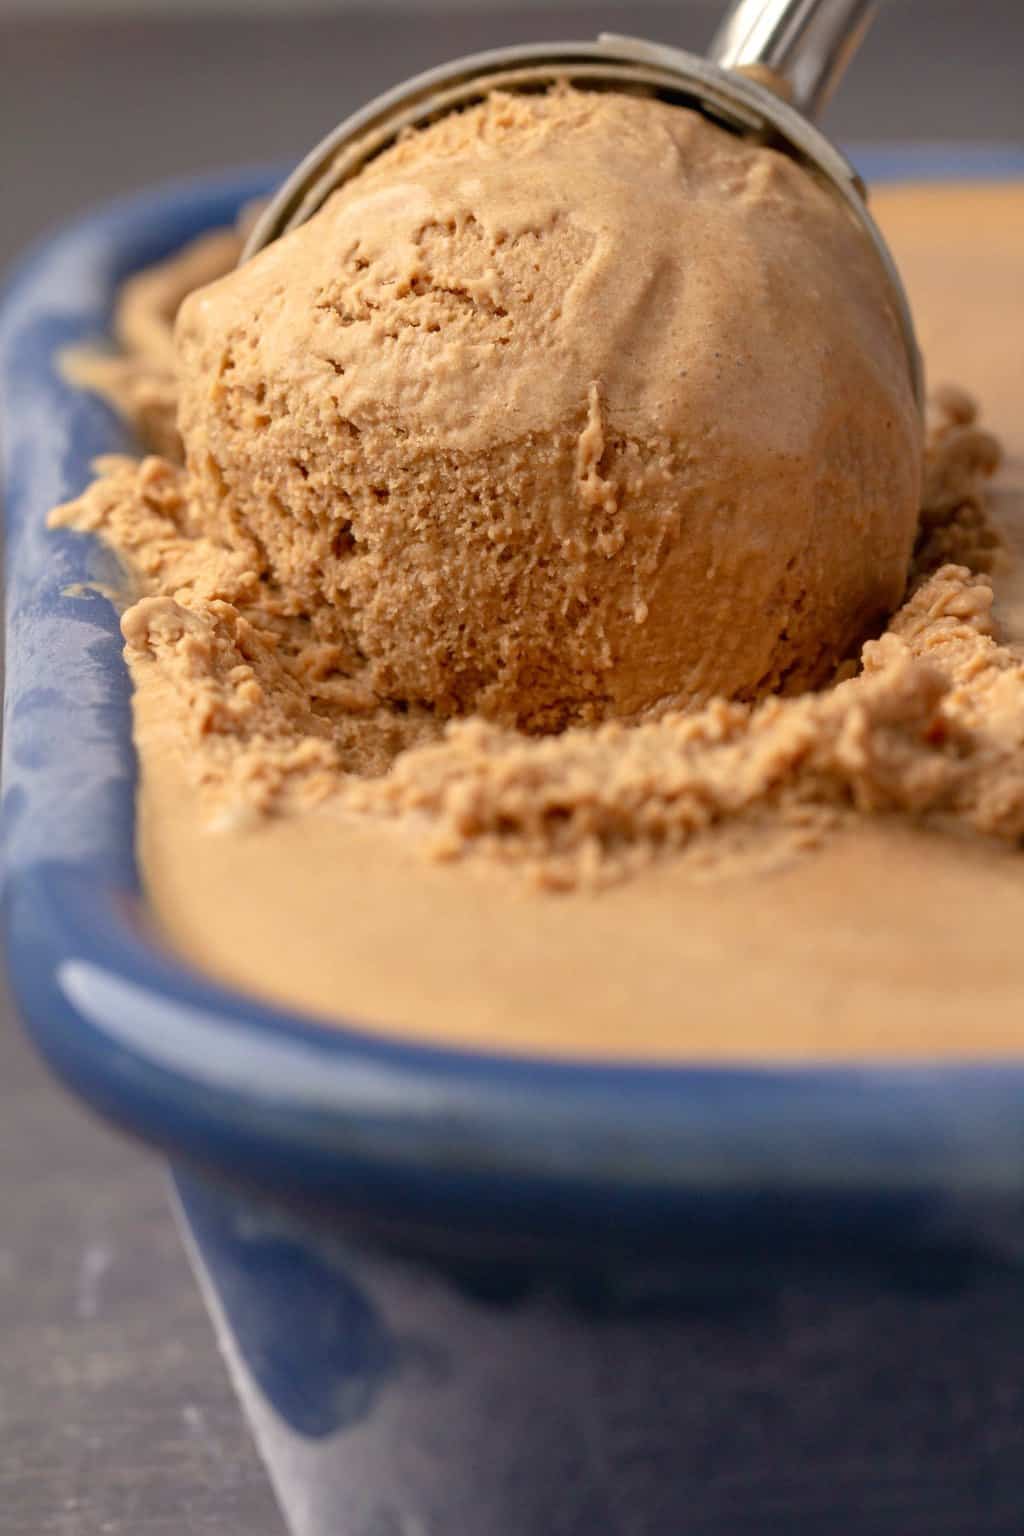 Vegan coffee ice cream in a blue ceramic dish with an ice cream scoop. 